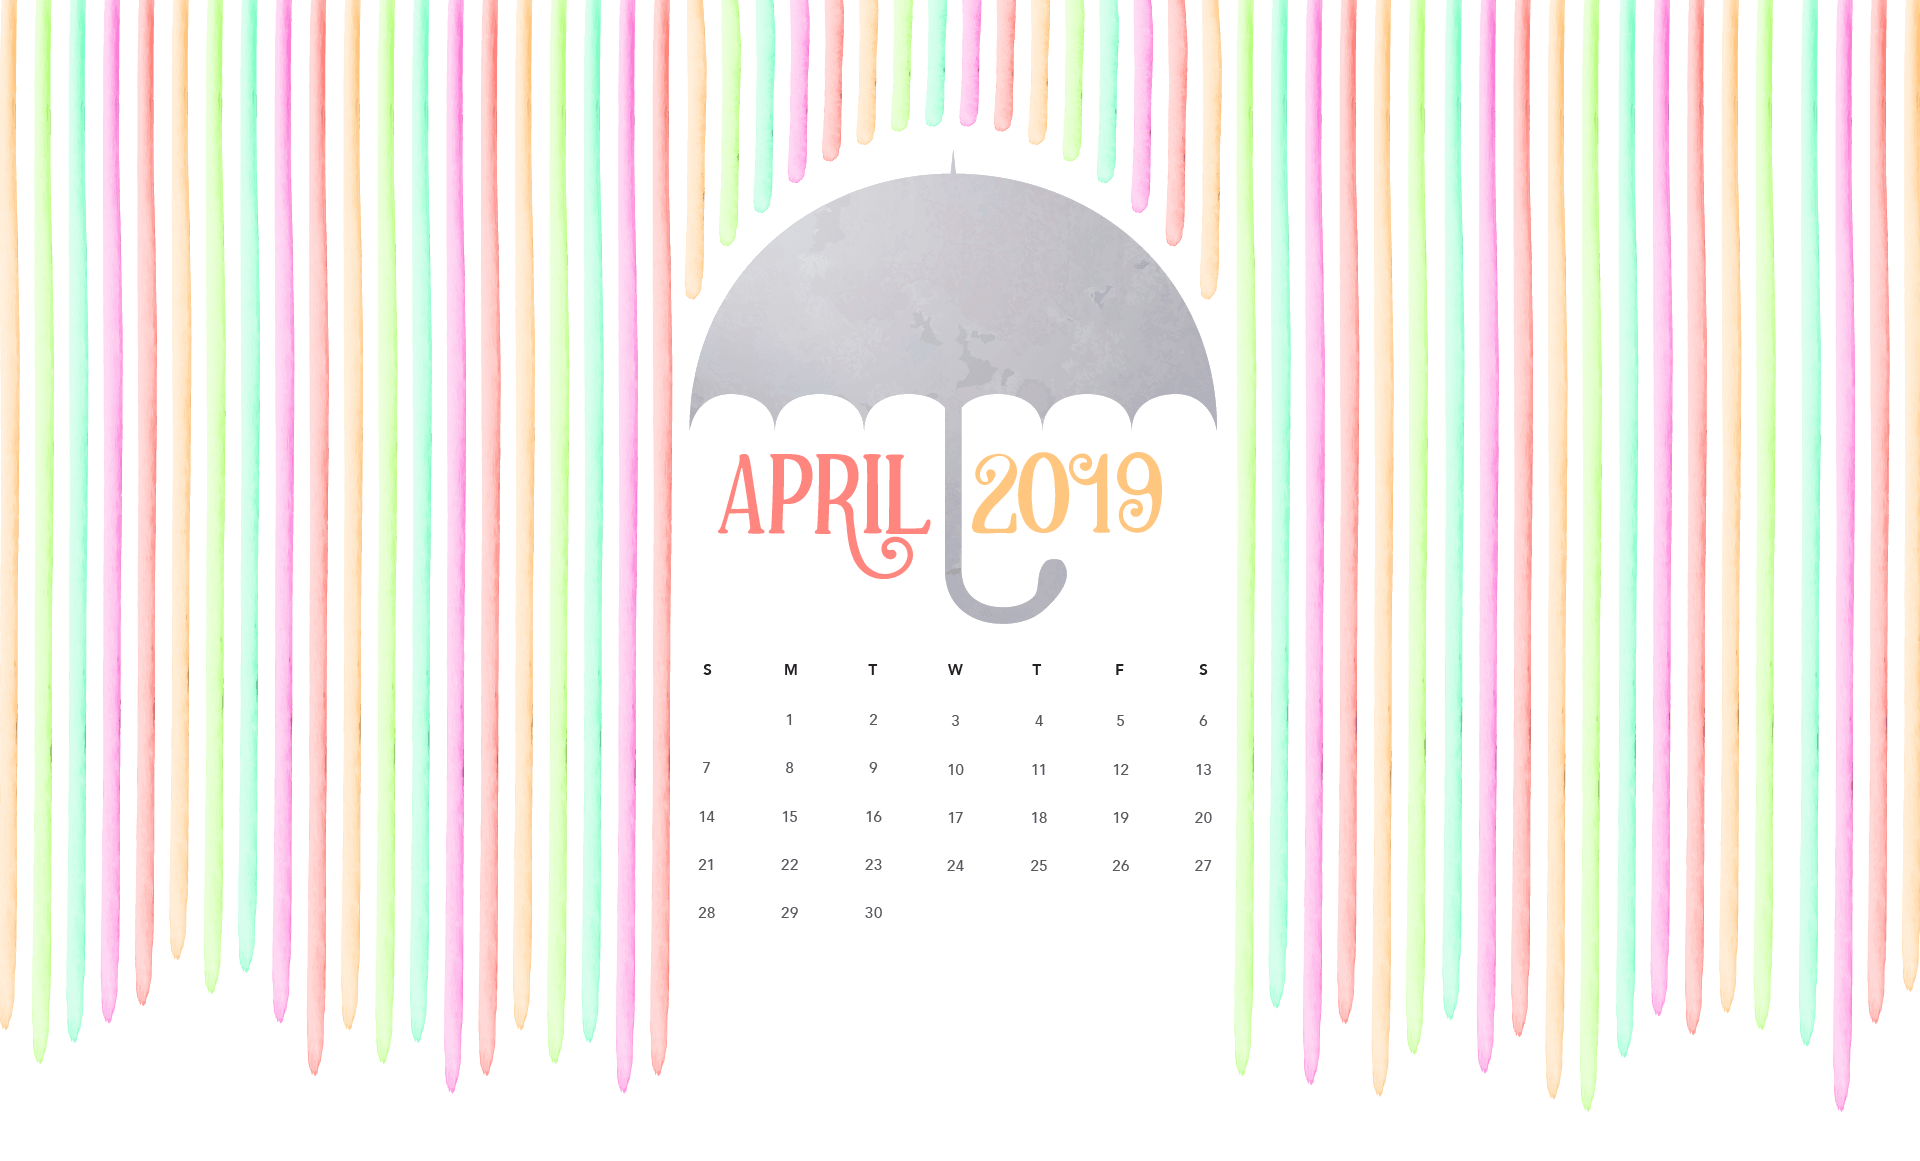 Beautiful April 2019 Calendar Wallpaper. April 2019 Calendar